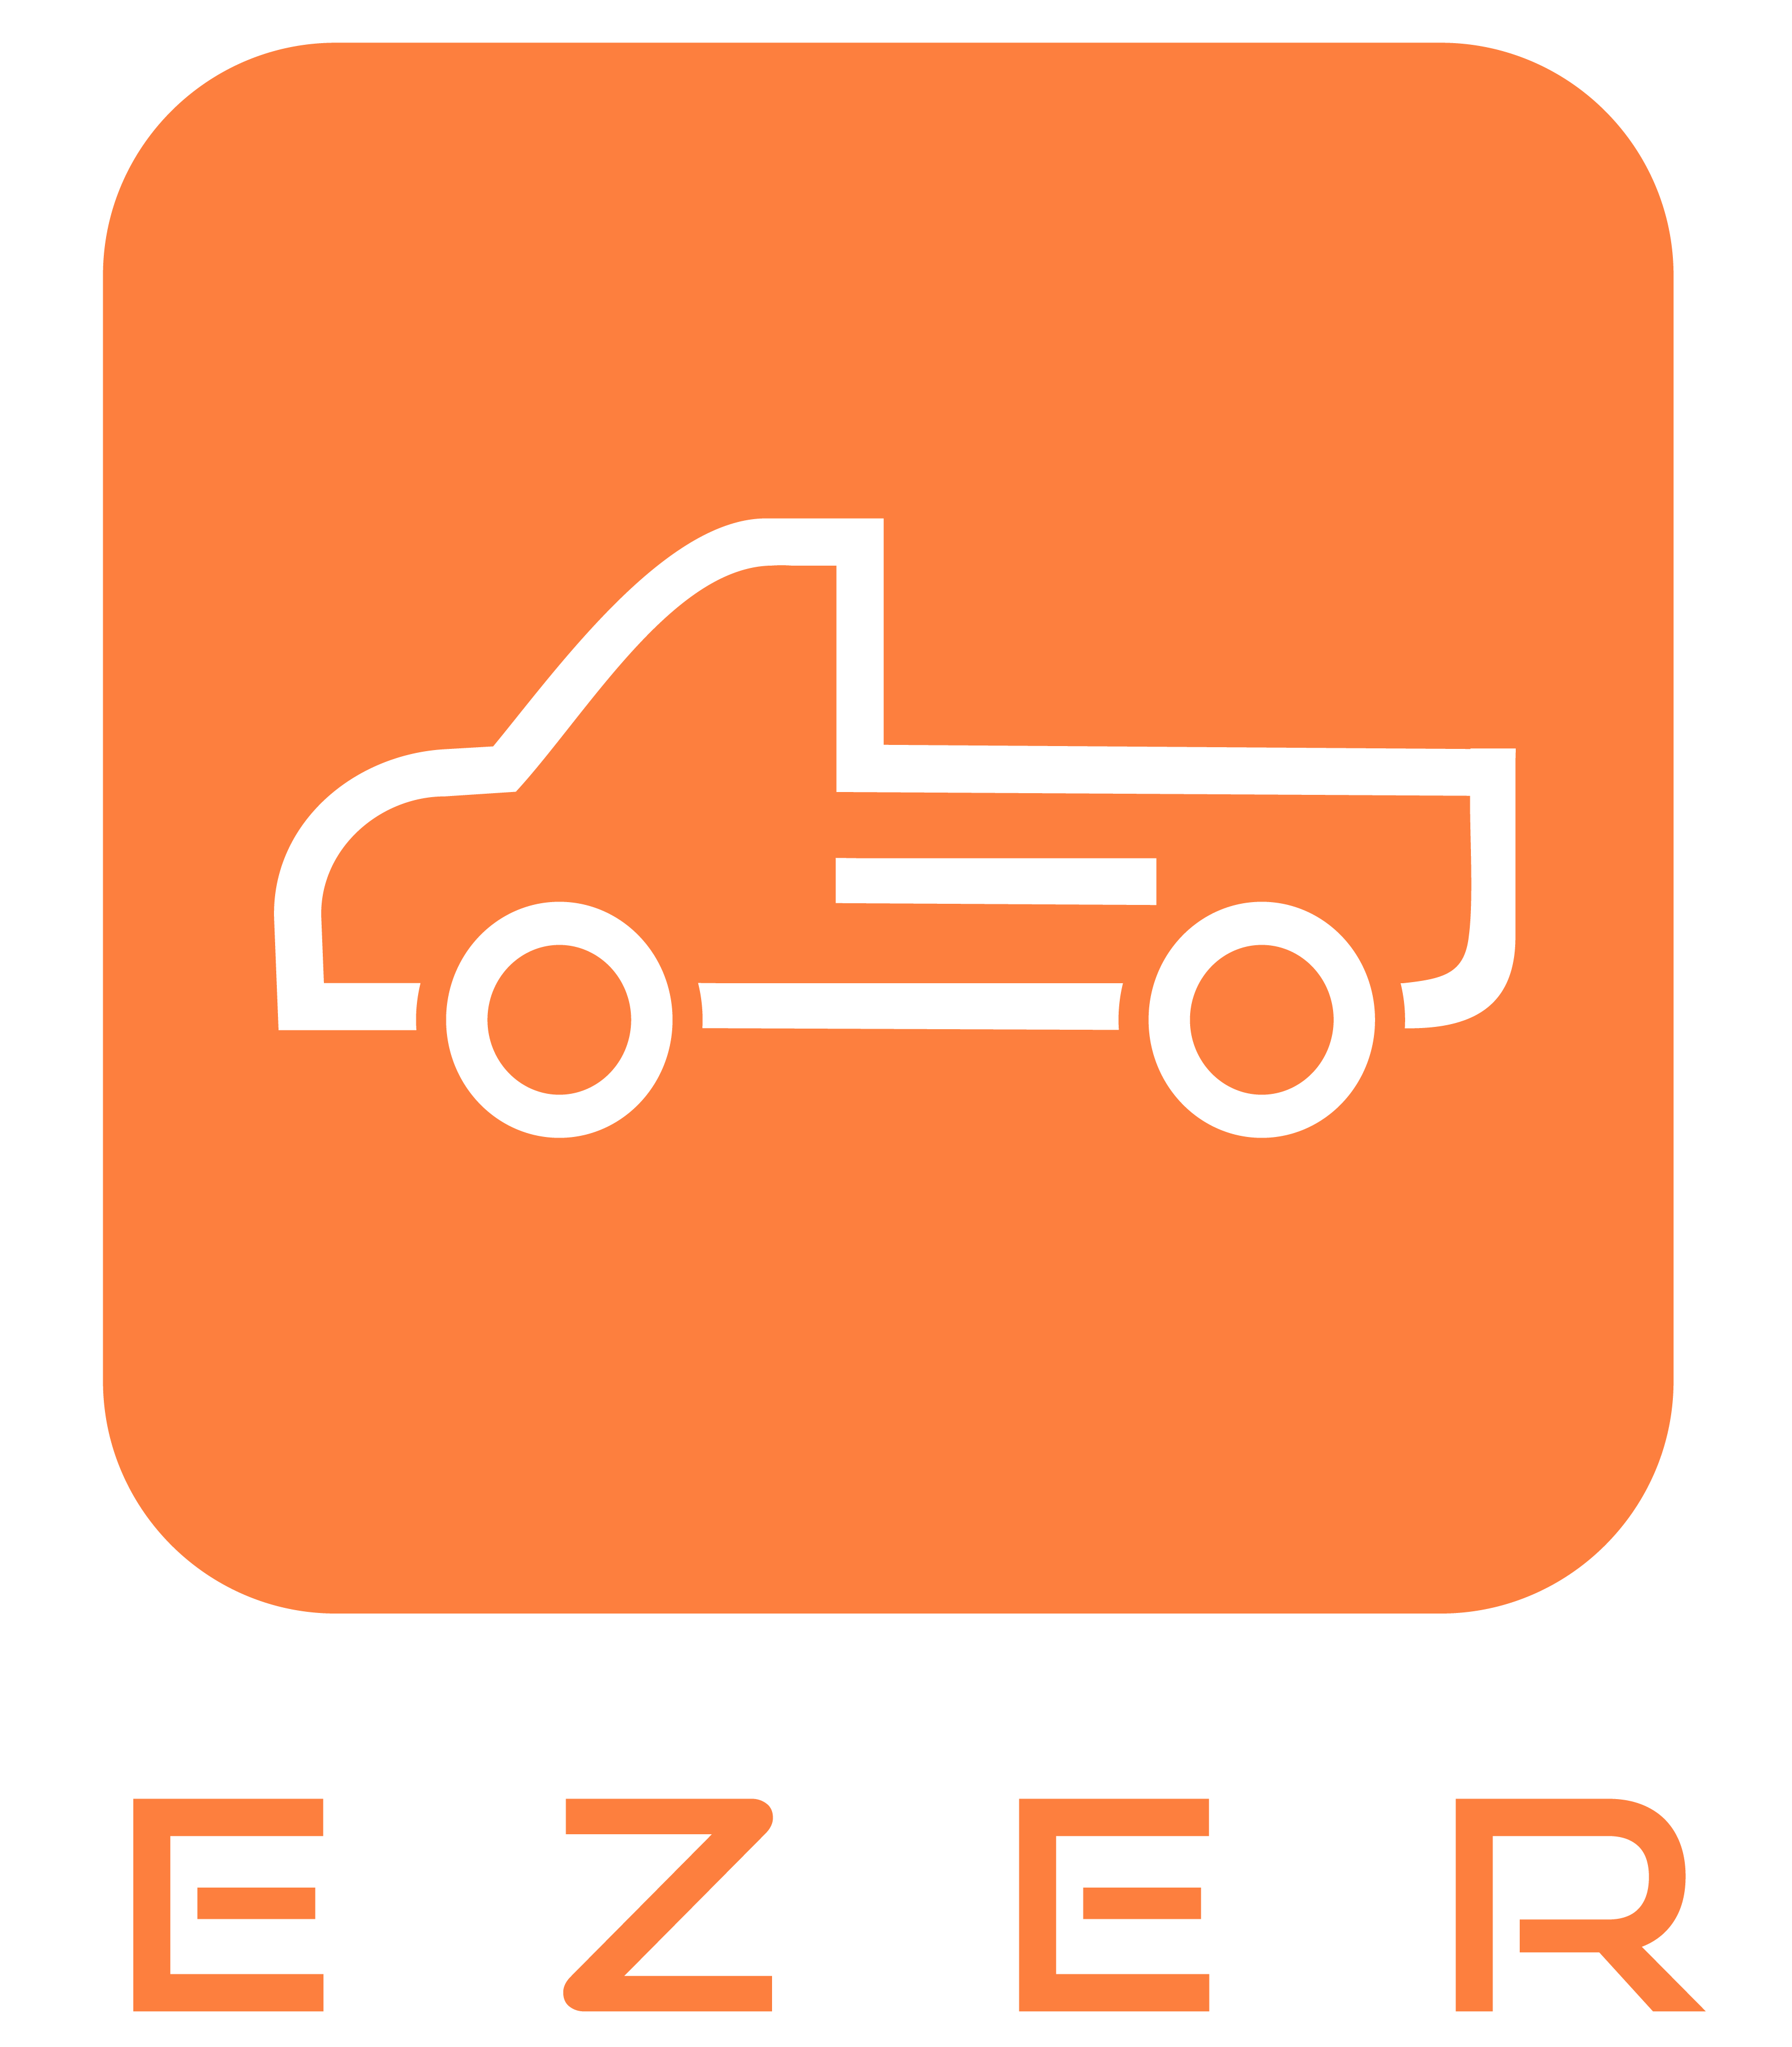 EZER Inc.